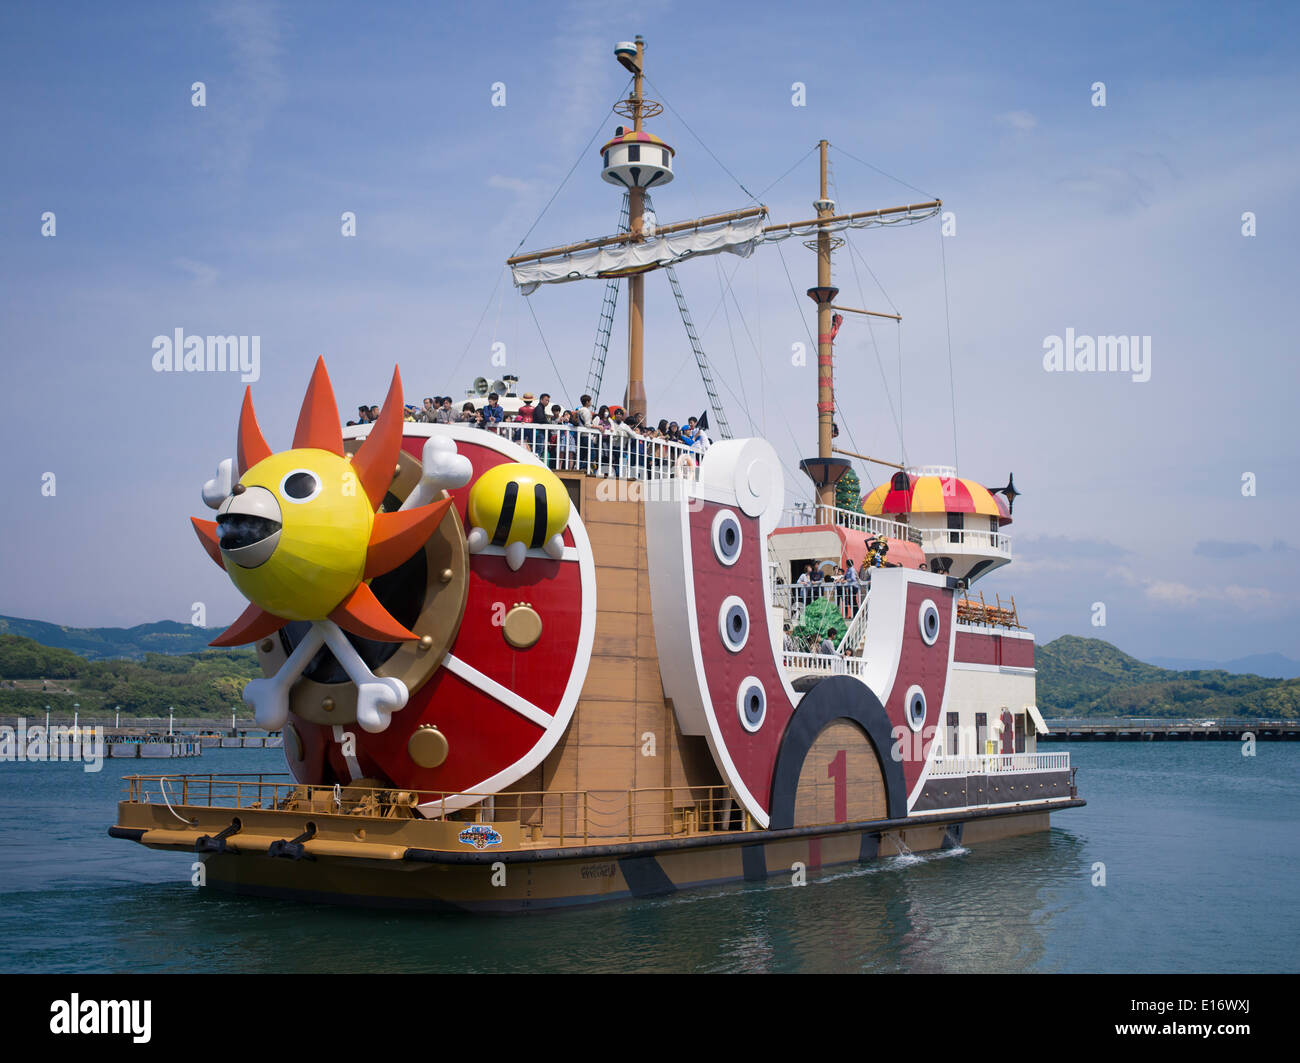 One Piece Boat Japanese Anime By Eiichiro Oda At Huis Ten Bosch A Theme Park In Sasebo Nagasaki Japan Stock Photo Alamy